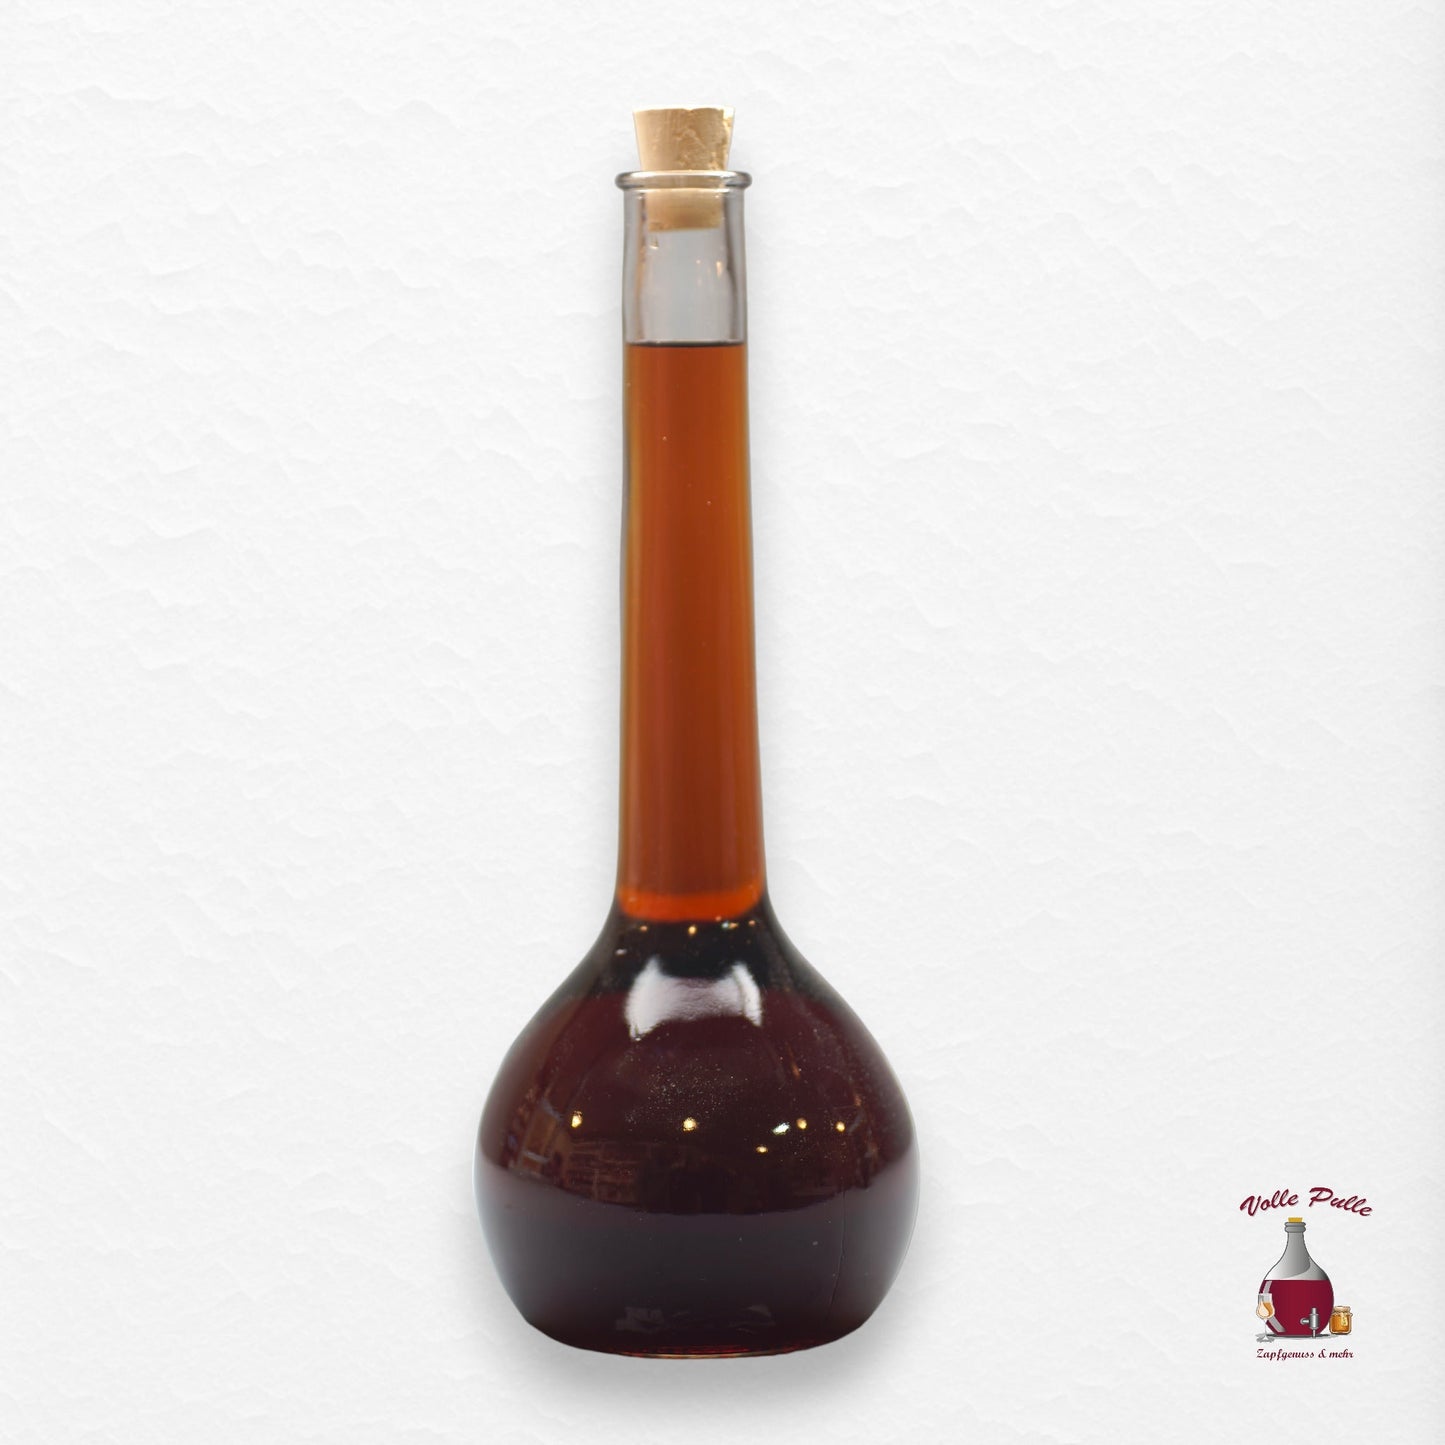 Balsam Spritz - Vinegar Bar